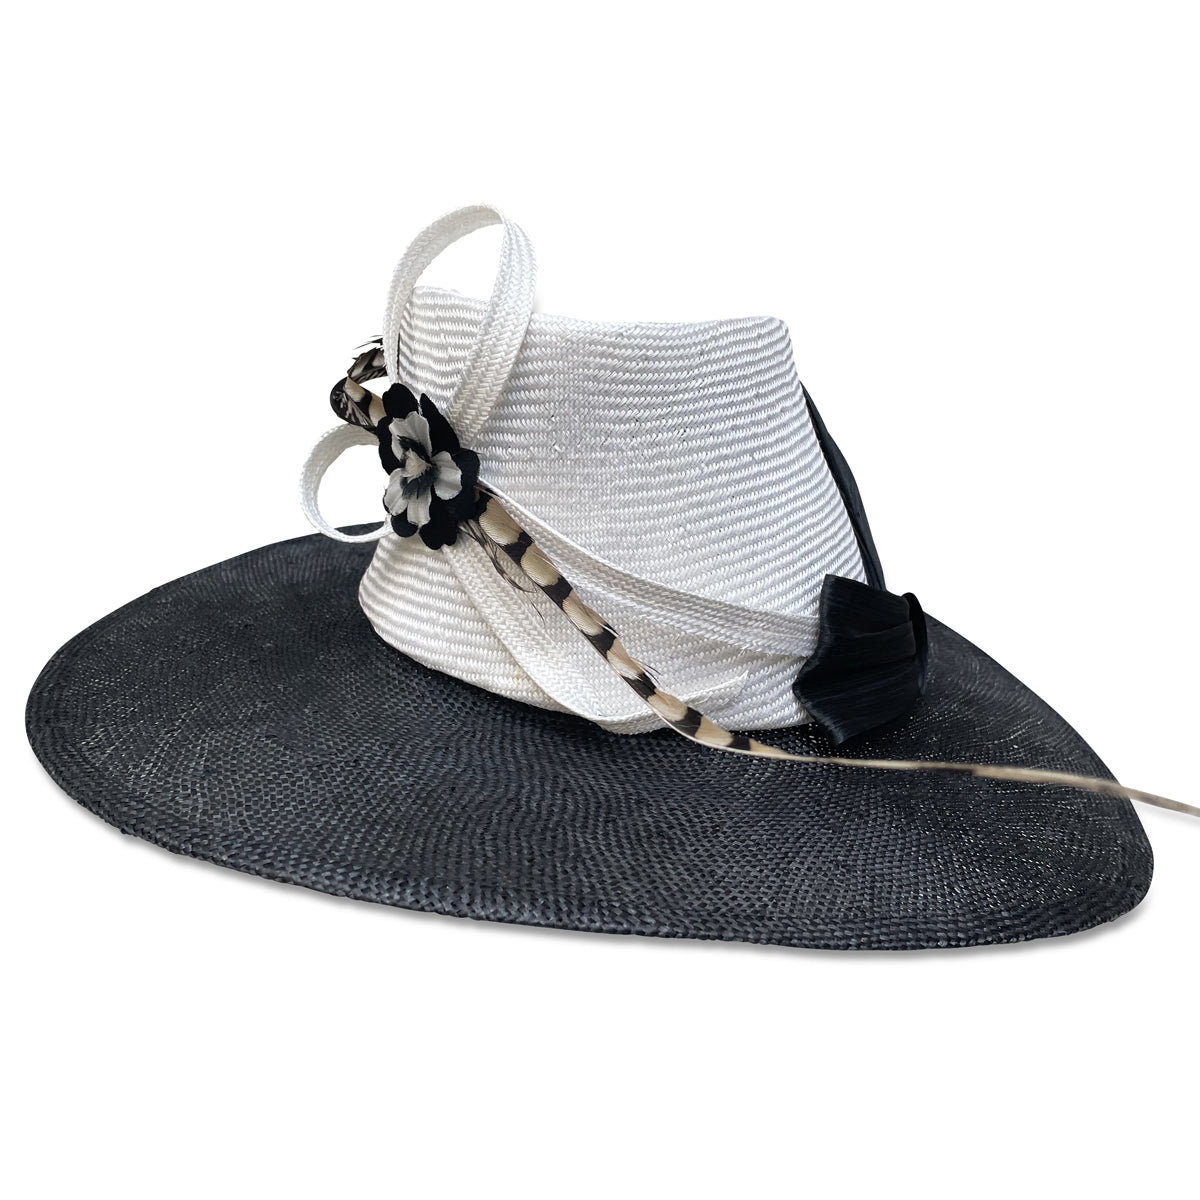 Black and White straw hat